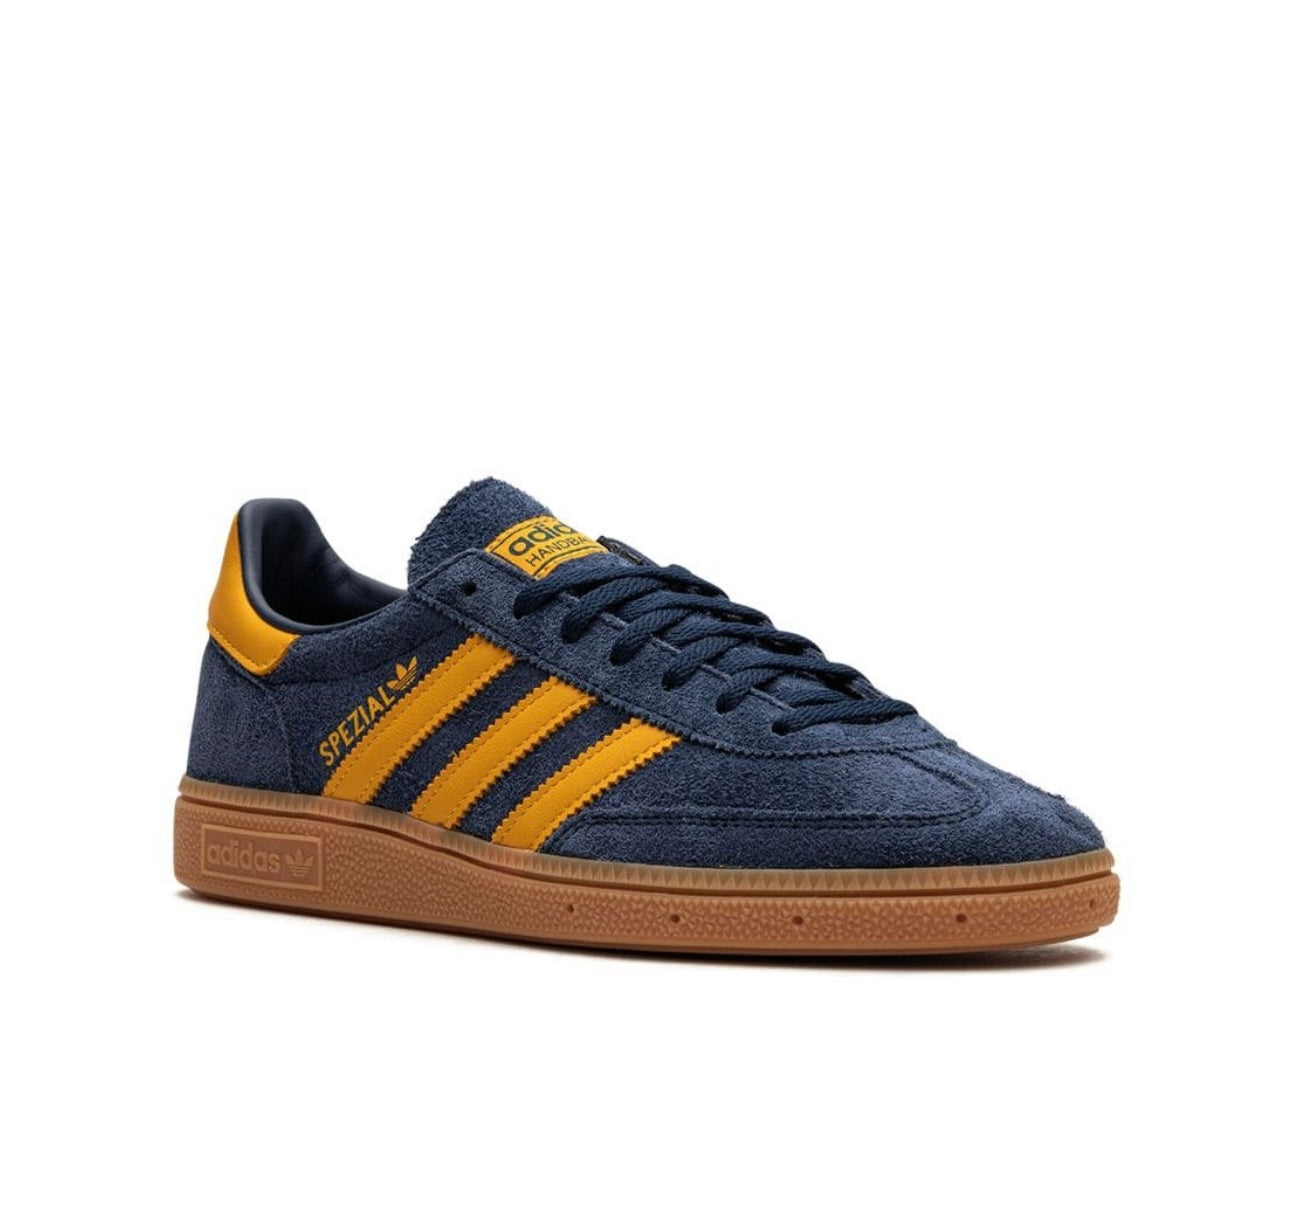 Adidas spezial yellow navy blue – Sneakersclub